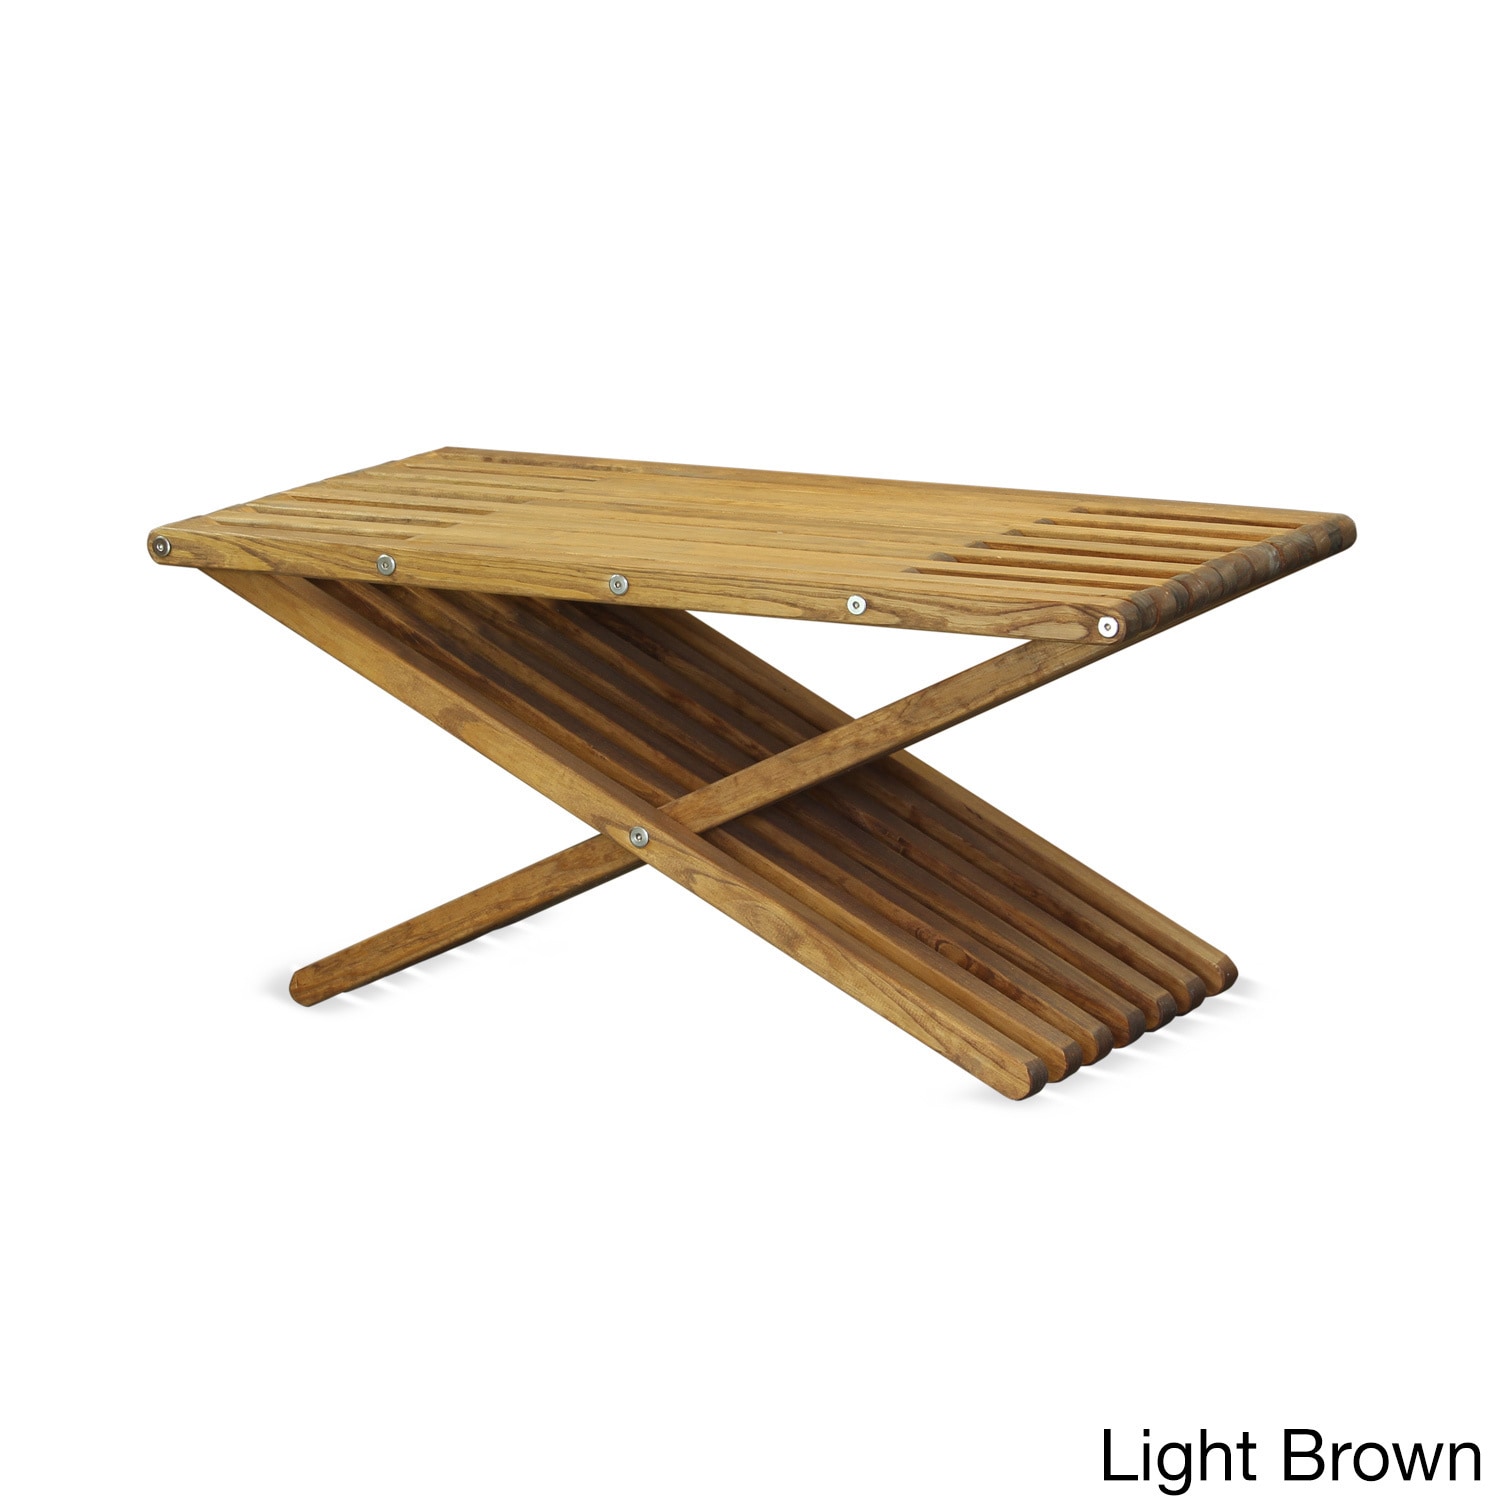 GloDea Eco Friendly Wood Coffee Table 20 x 36 by  Sky Blue - image 5 of 5